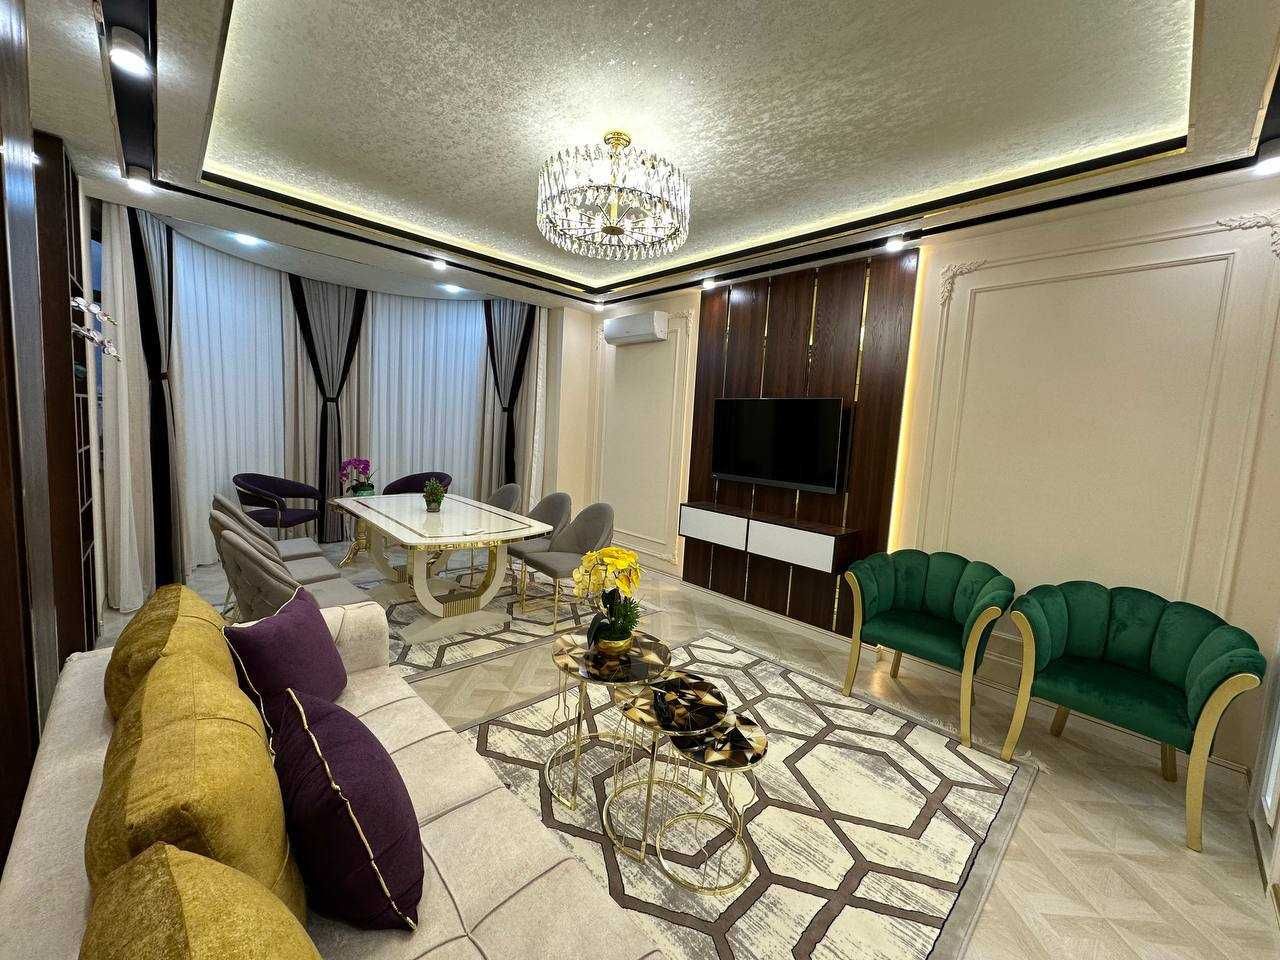 Сдается комфортная квартира в ЖК Ташкент Сити!